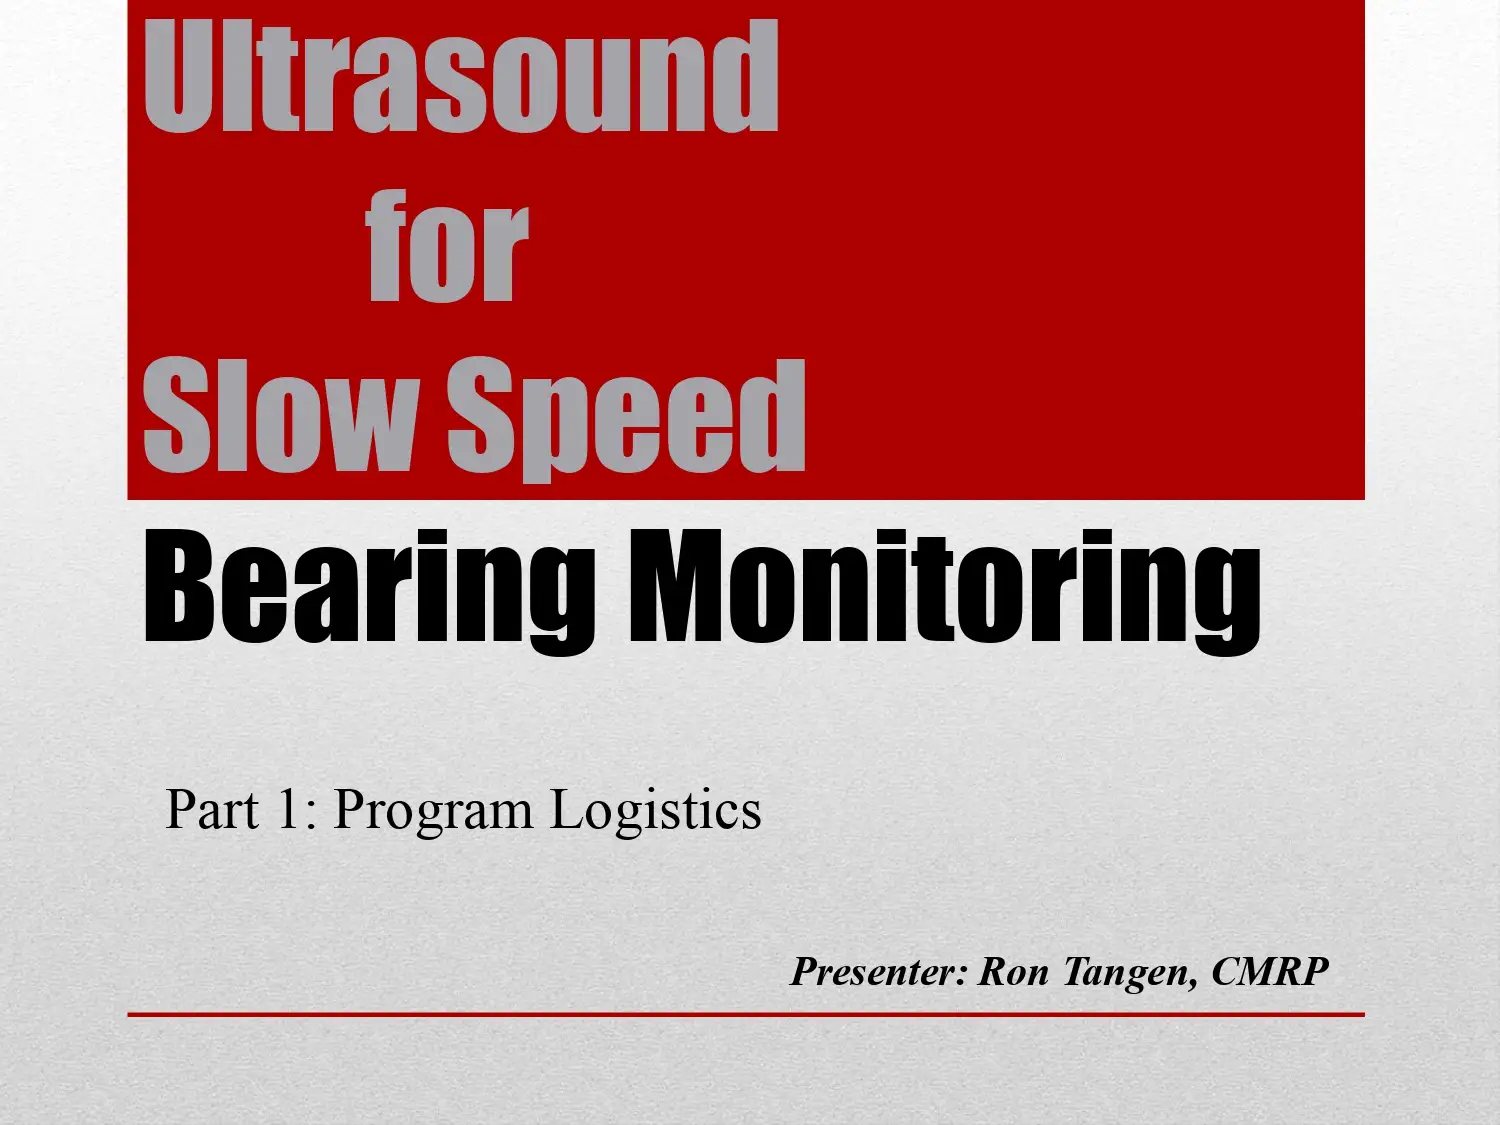 Ultrasound for Slow Speed Bearing Monitoring